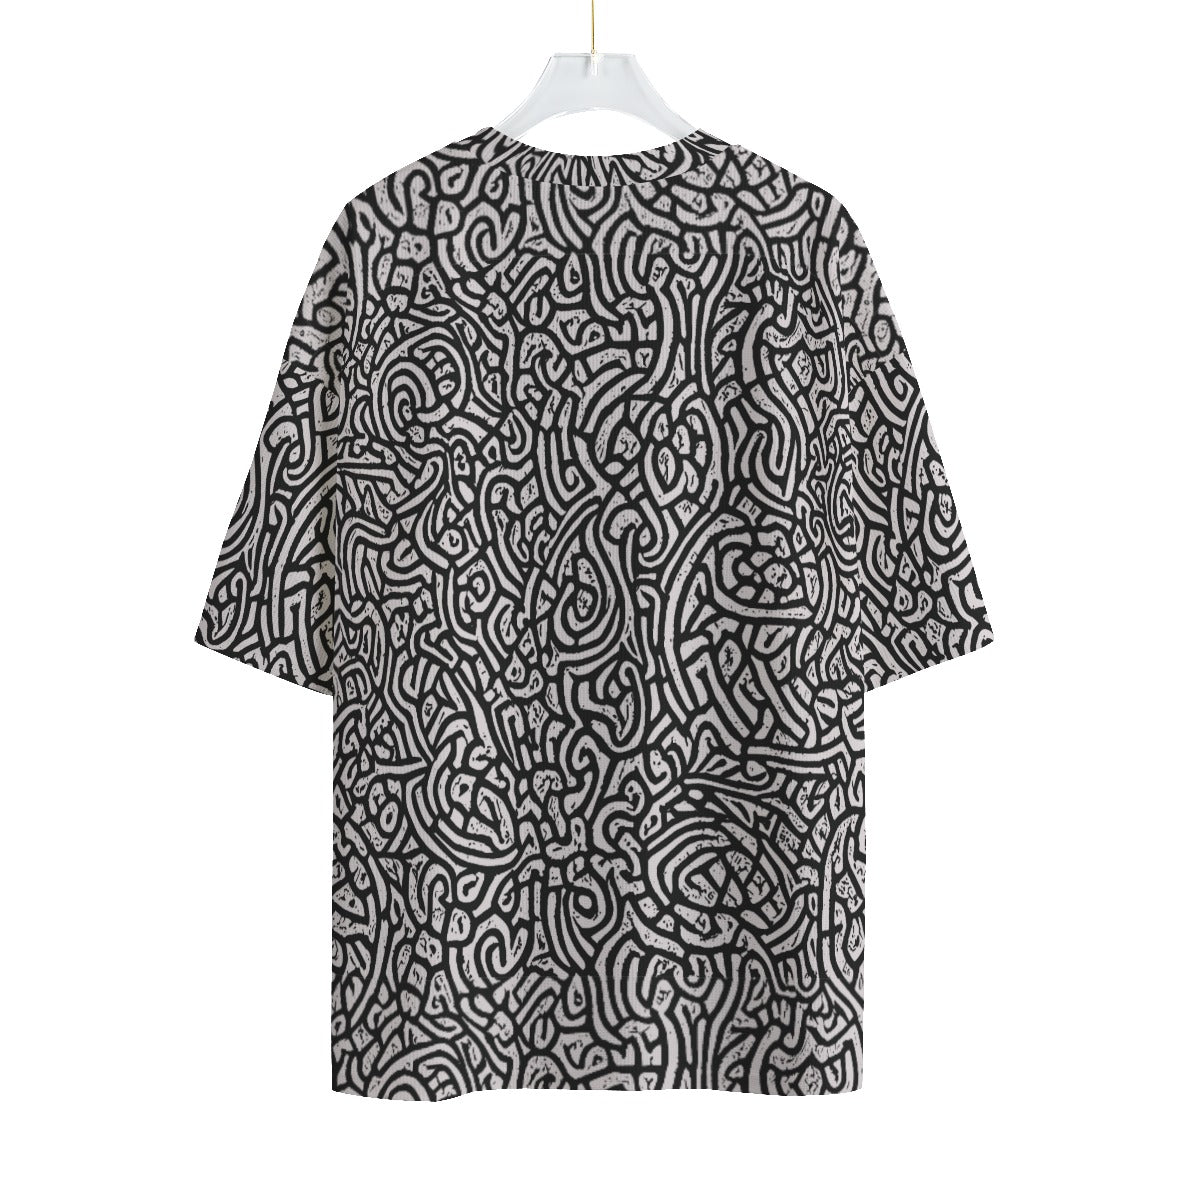 DECO/ART TRIBE Drop-Shoulder T-shirt | CANAANWEAR | T-Shirt |